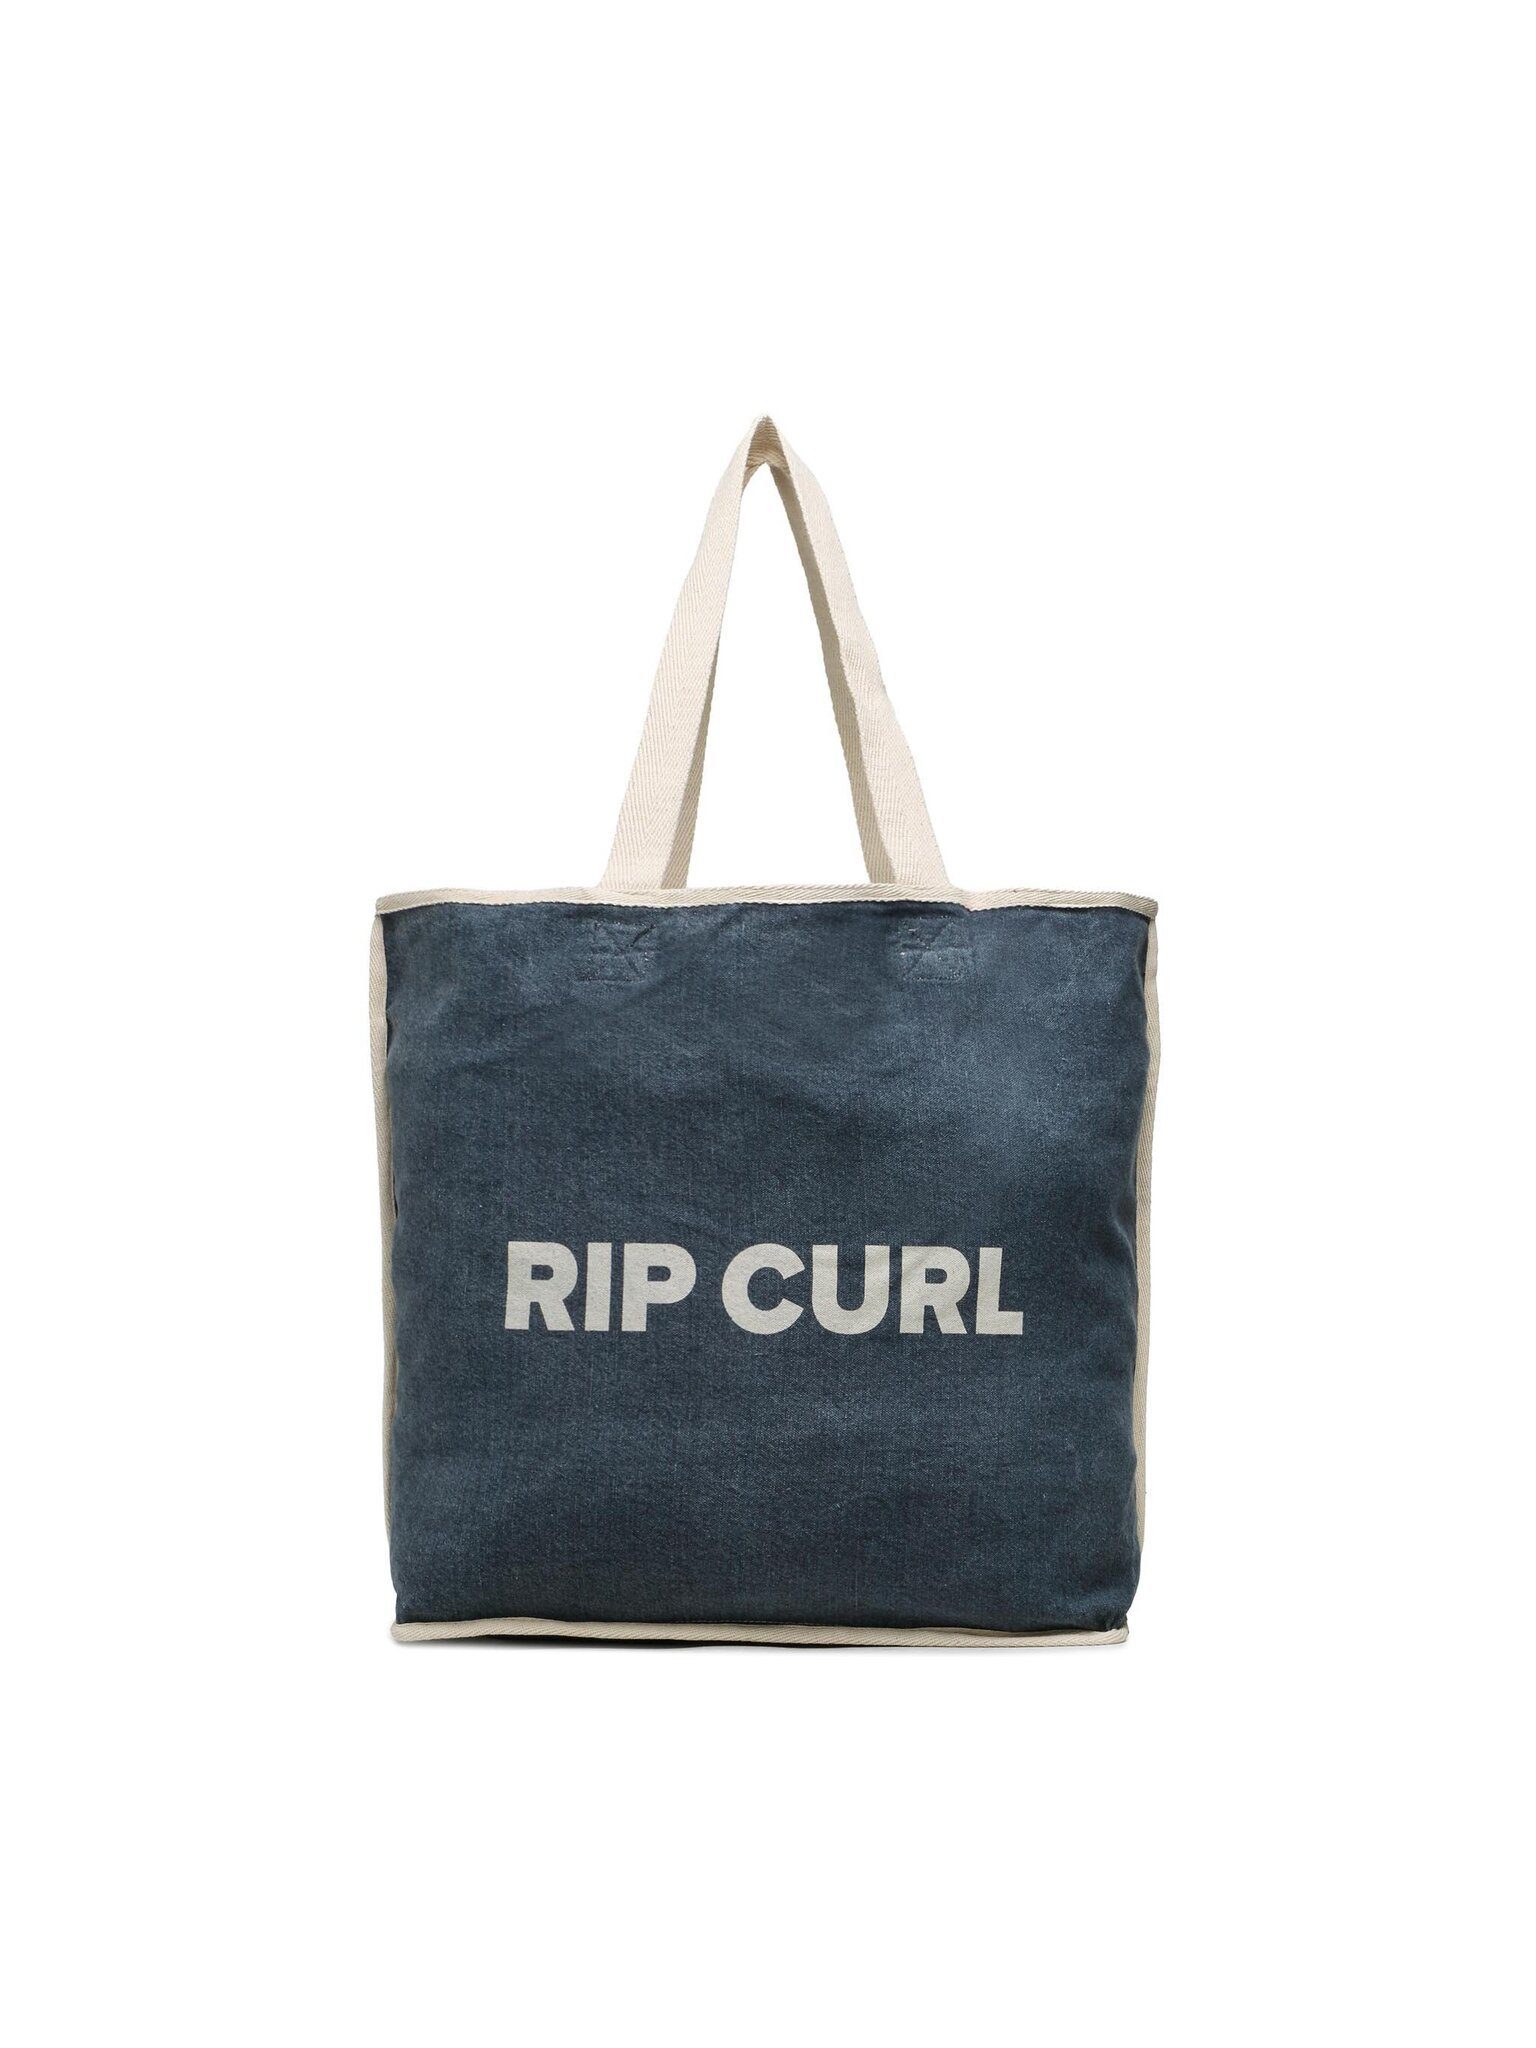 Rip Curl Handtasche Handtasche Classic Surf 31l Tote Bag 001WSB Navy 0049